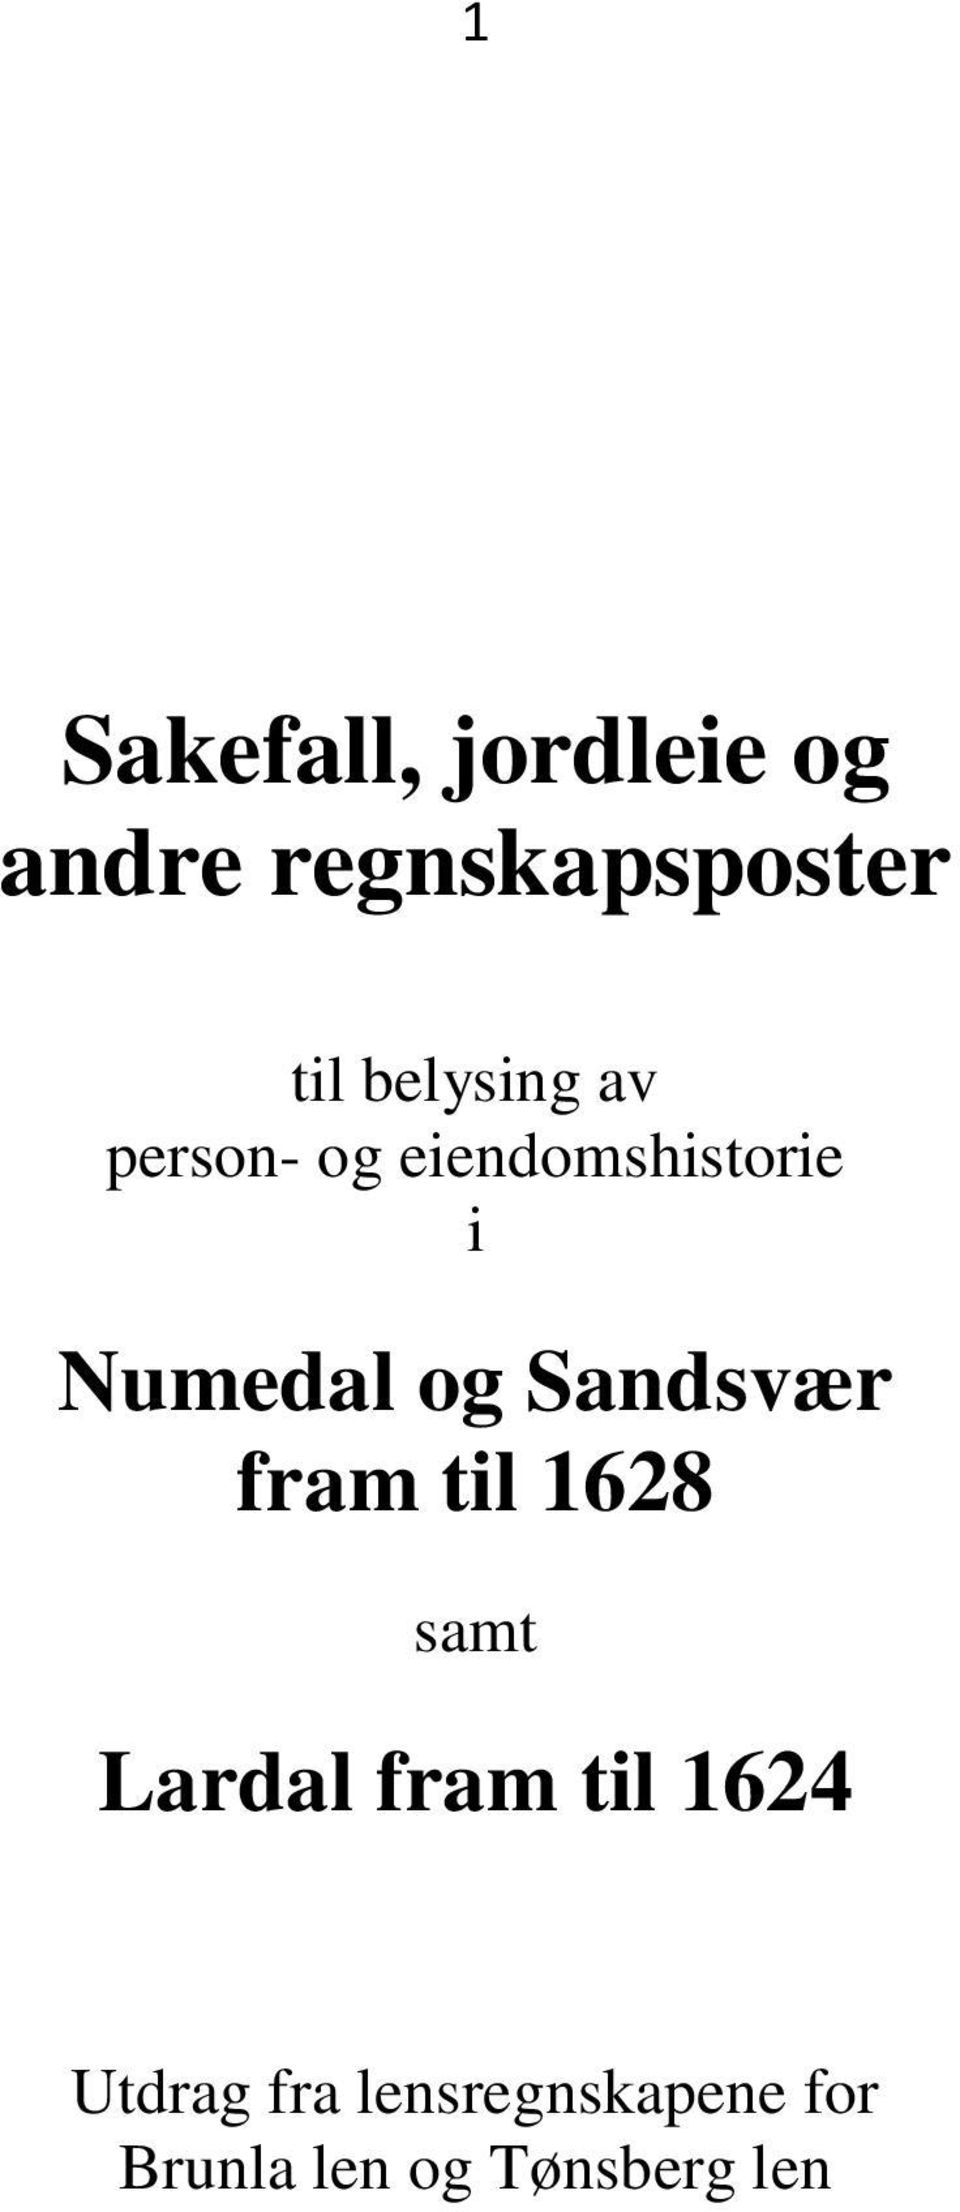 Sandsvær fram til 1628 samt Lardal fram til 1624